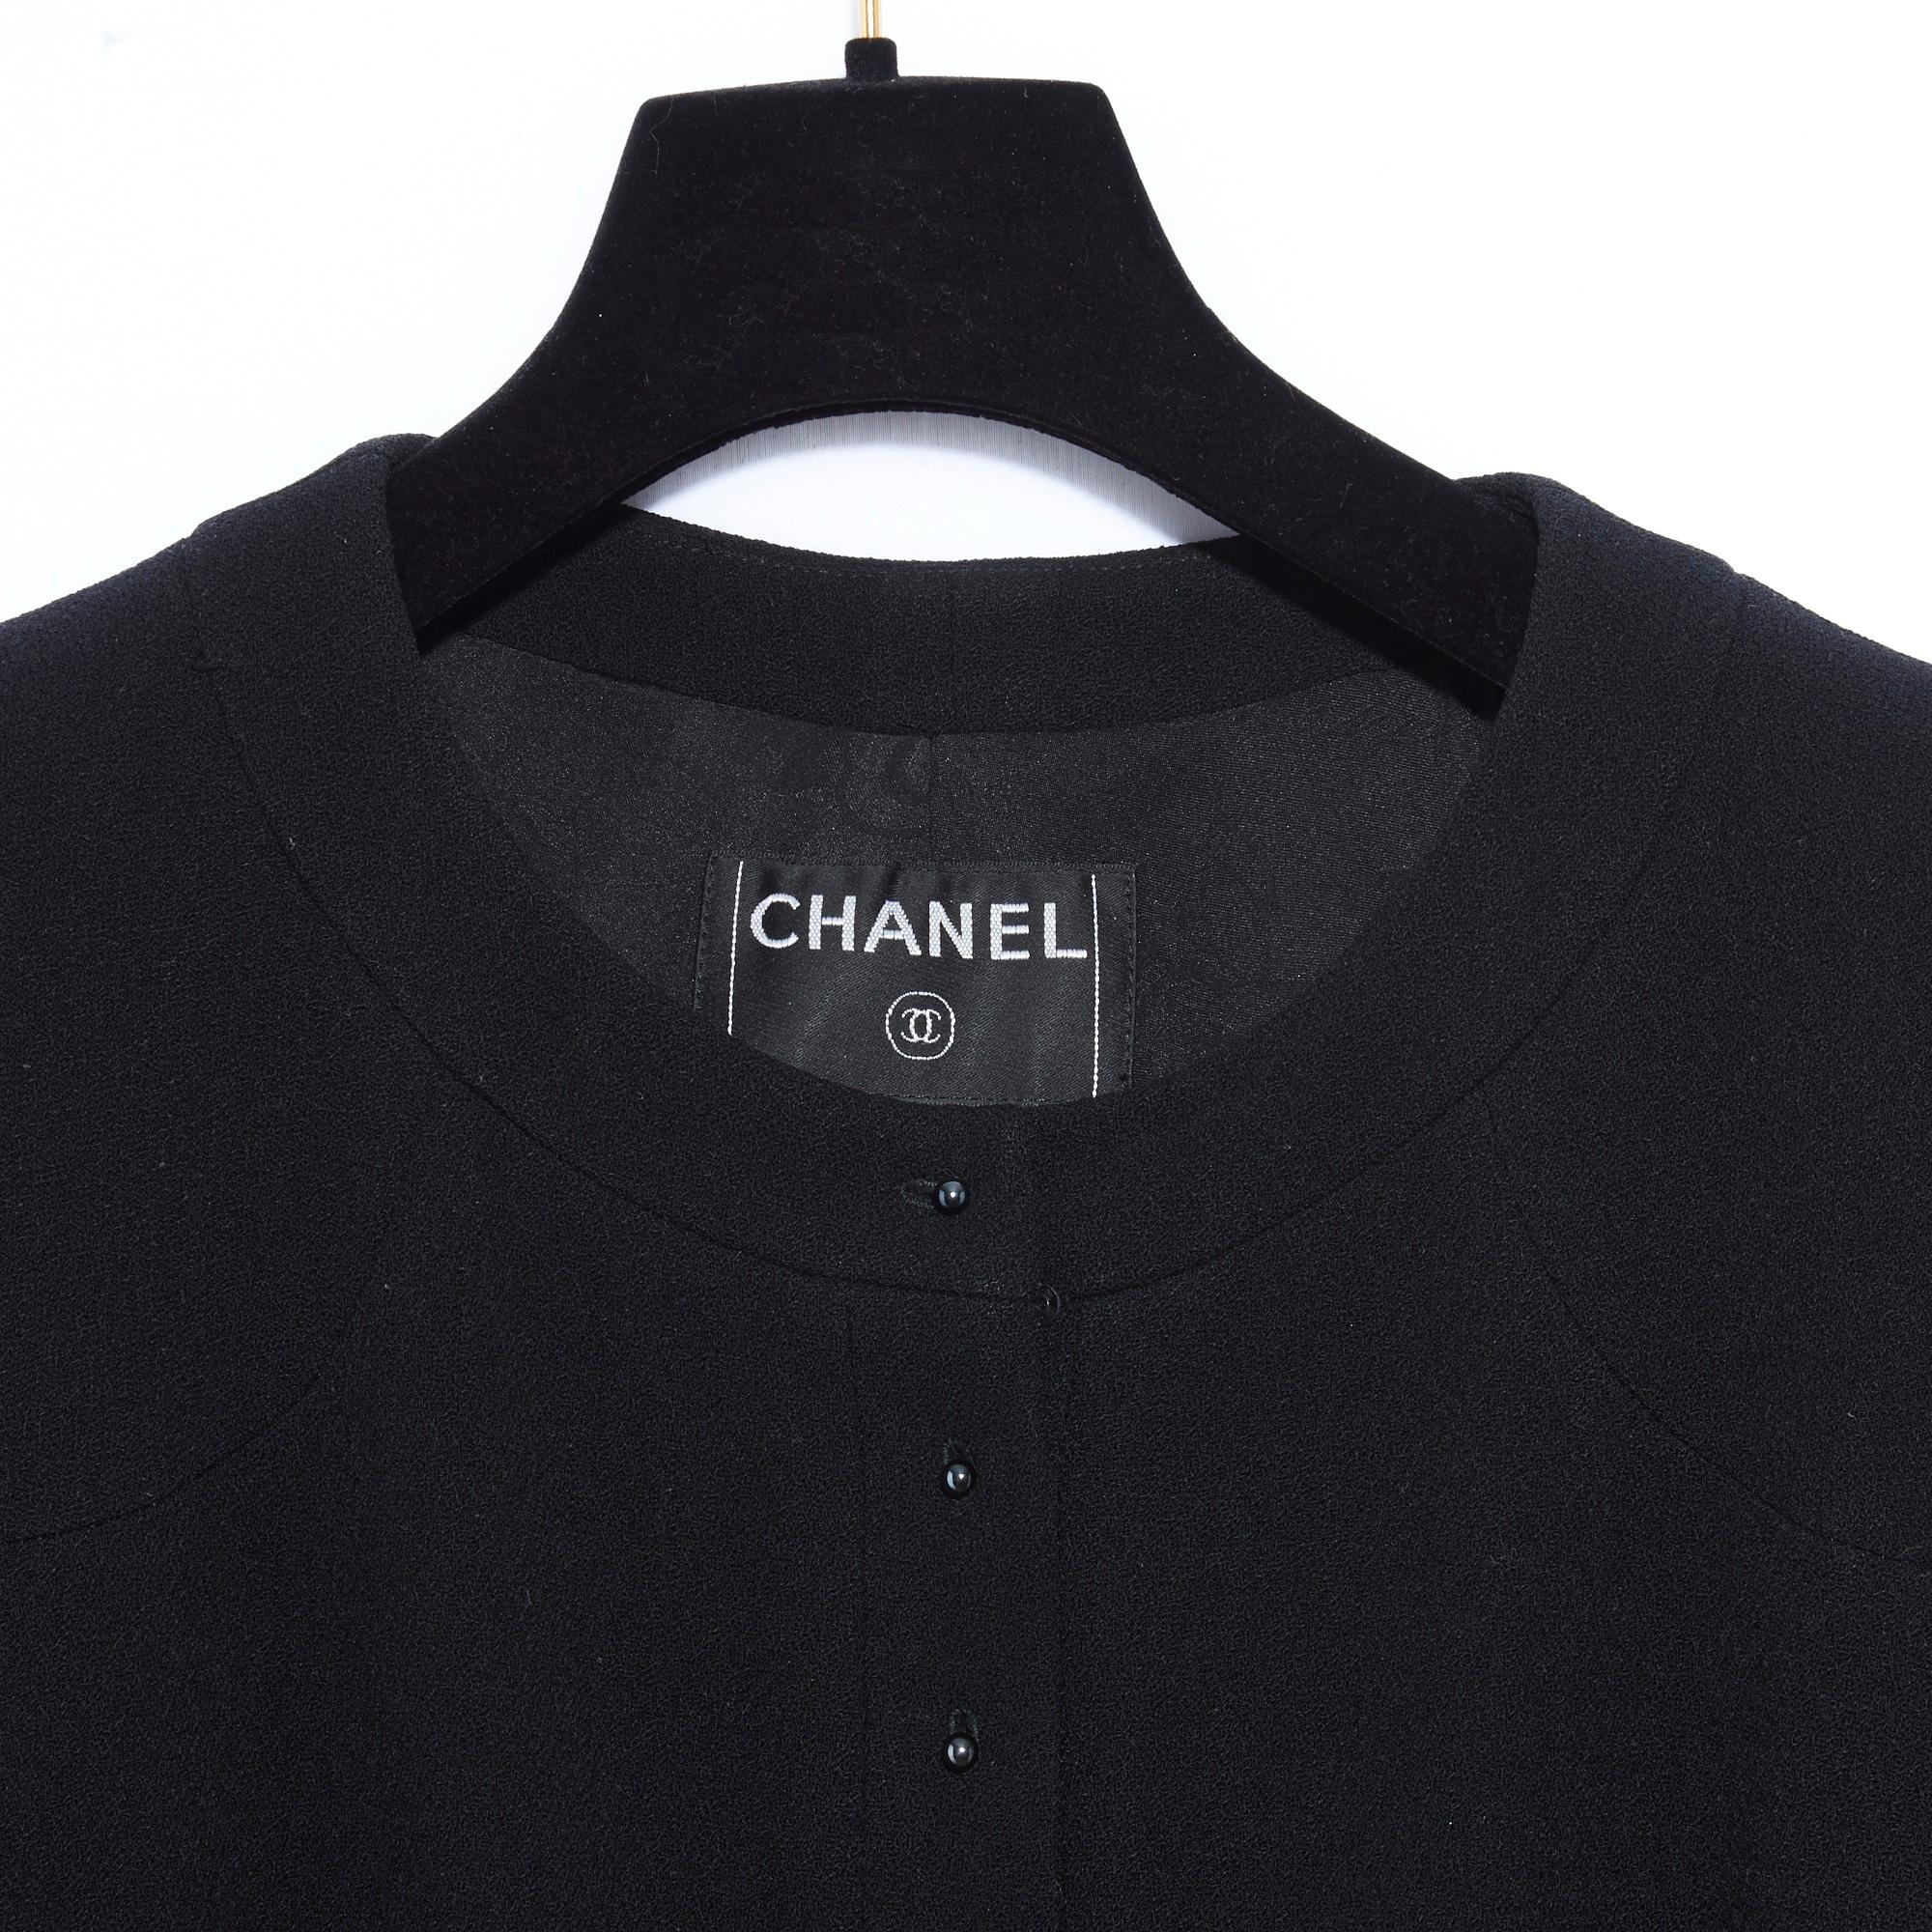 Women's or Men's FW 2002 Chanel Black crepe Jacket FR38/40  For Sale